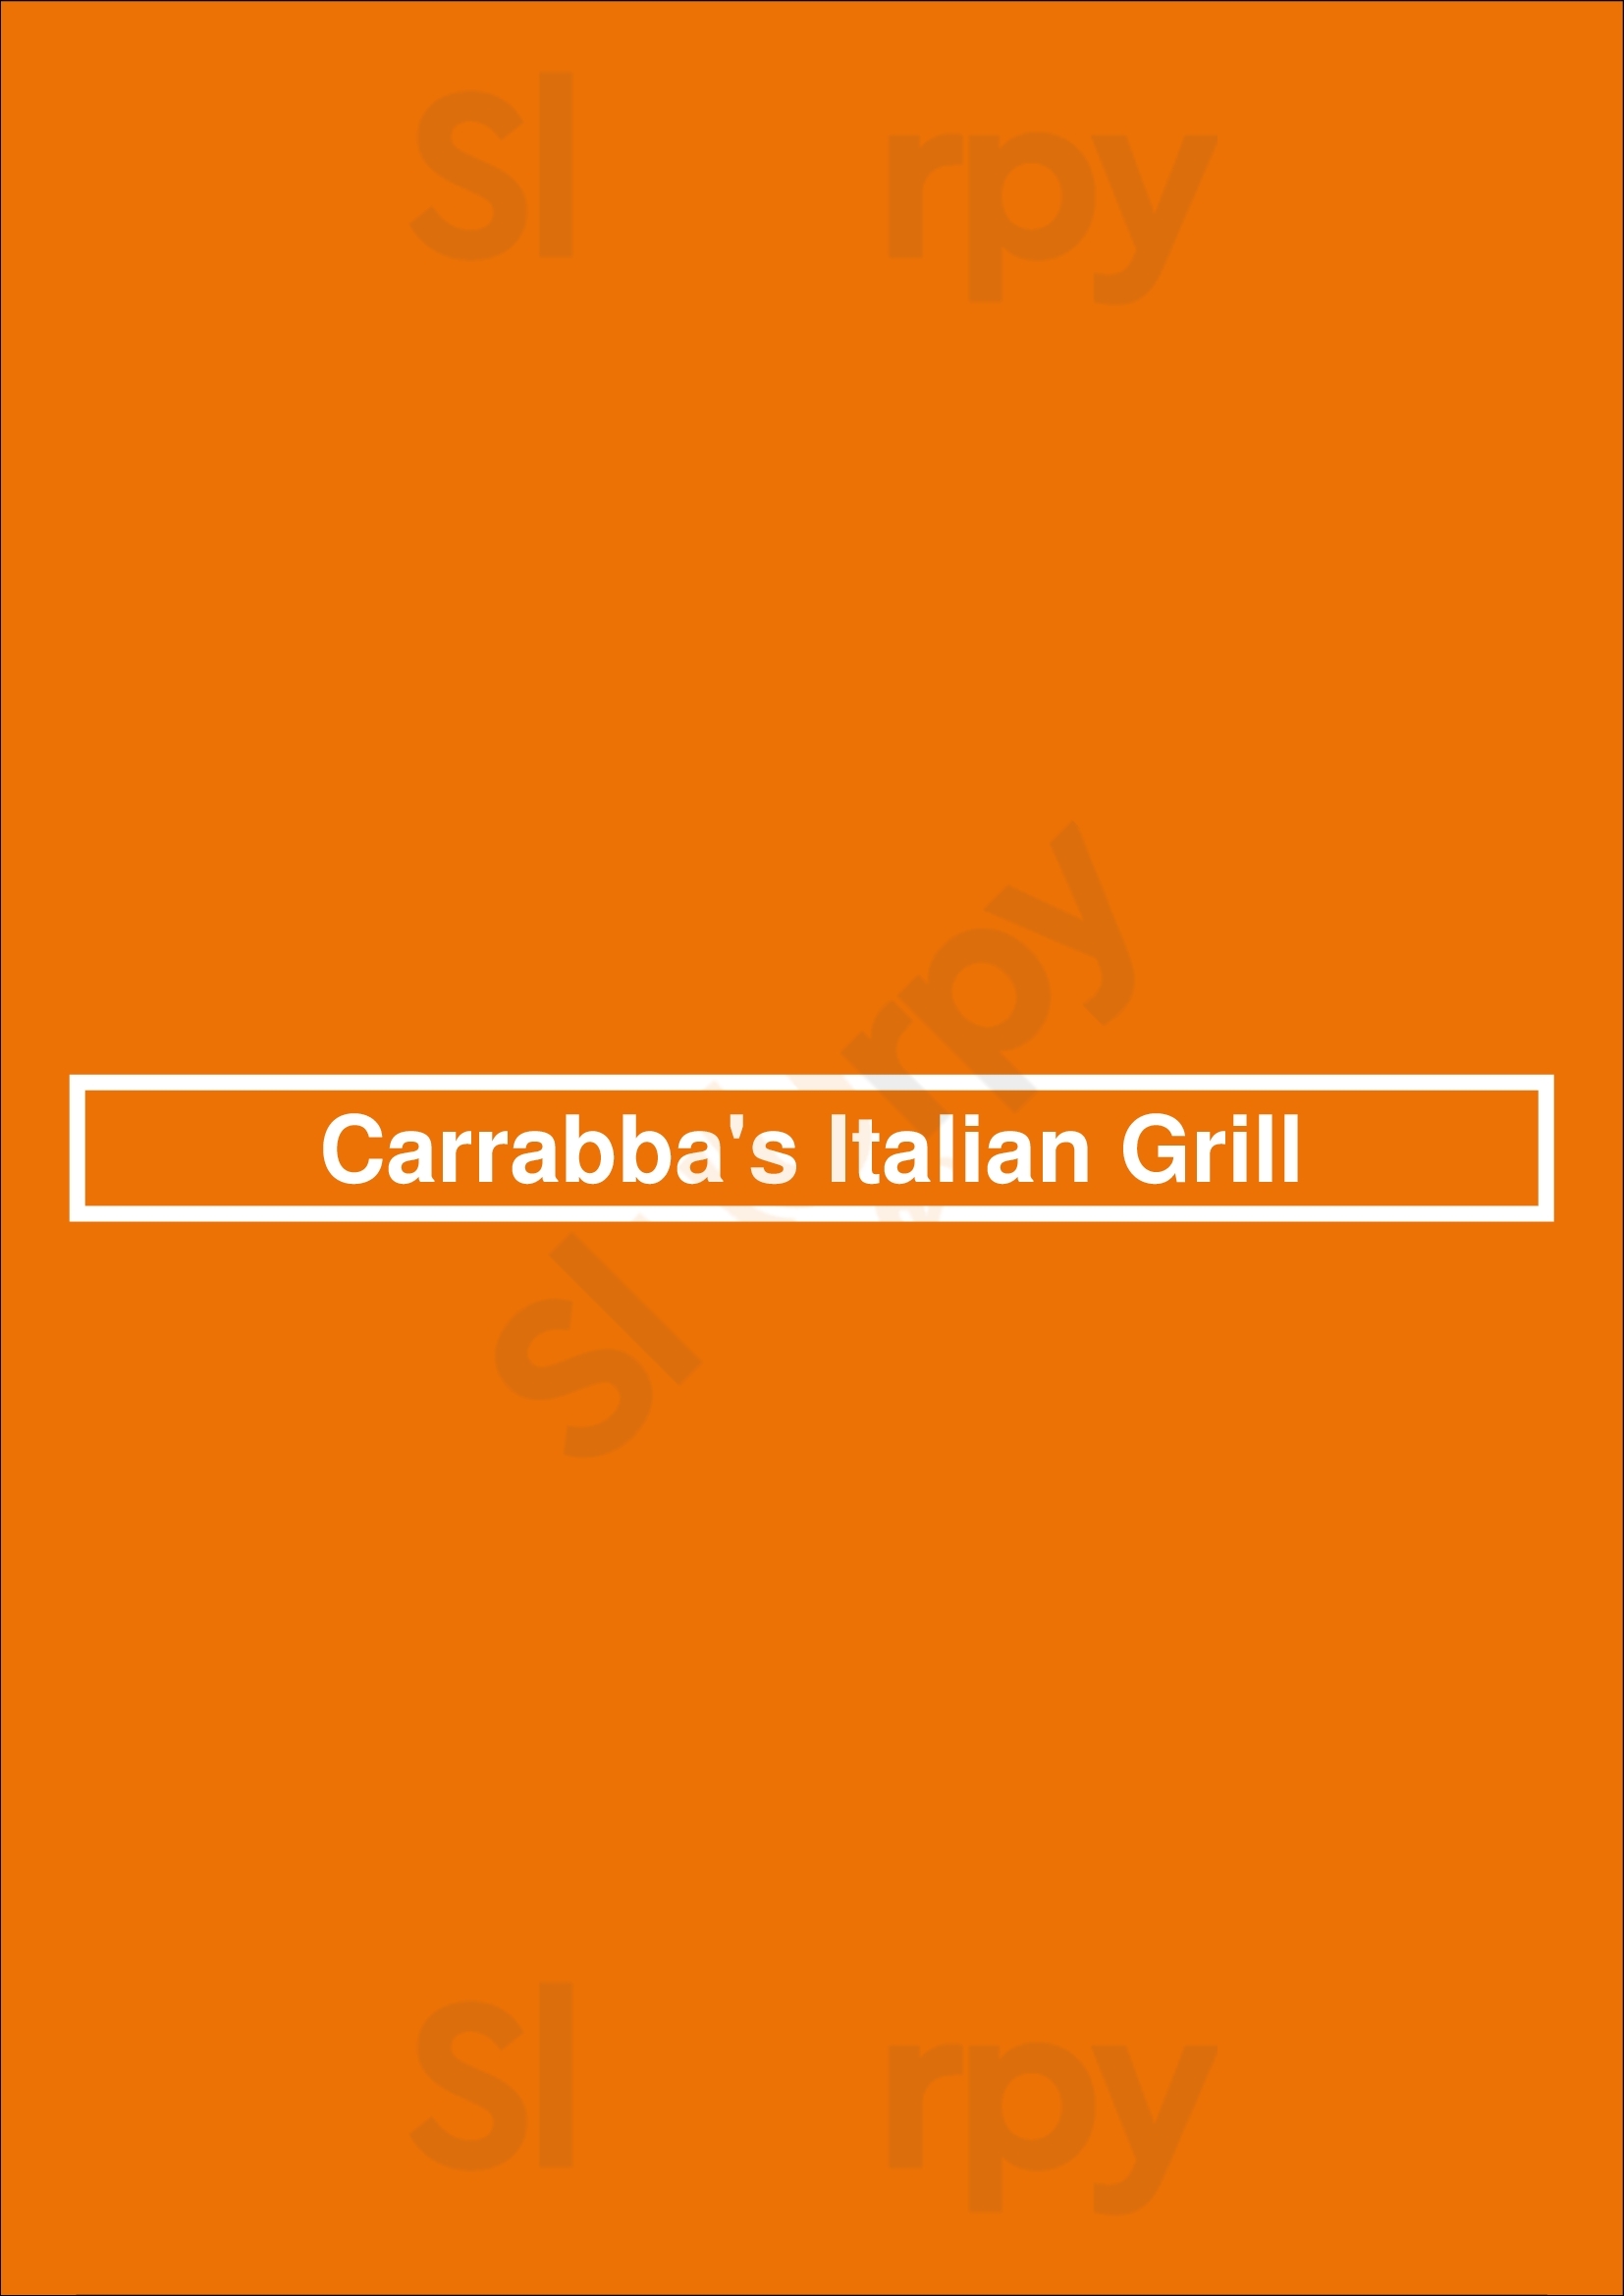 Carrabba's Italian Grill Miami Beach Menu - 1